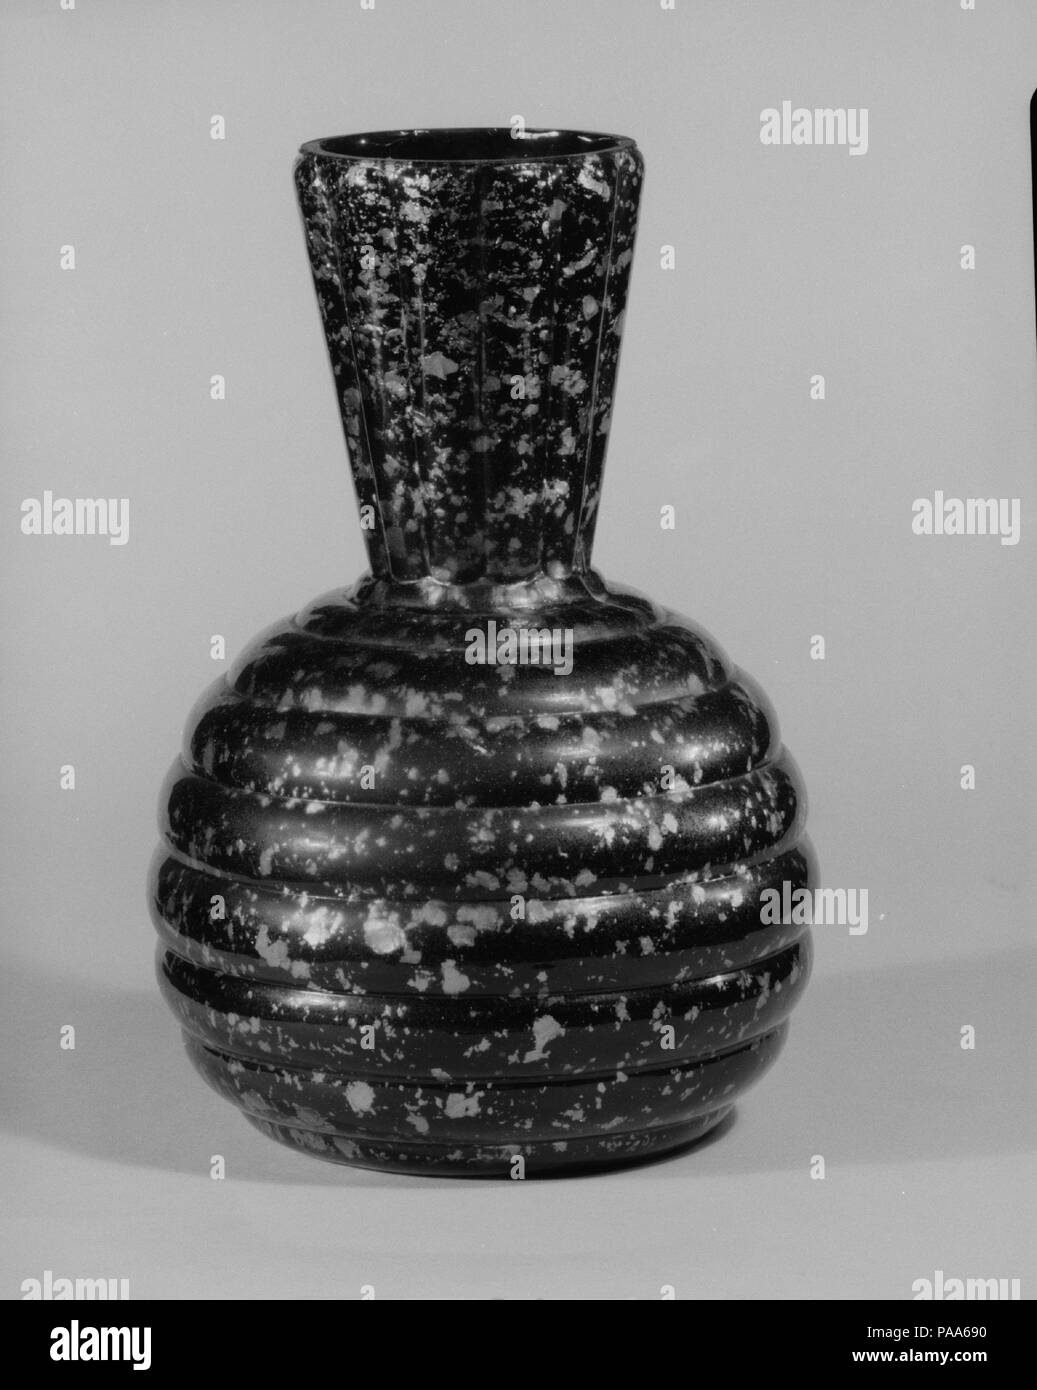 Vase. Culture: American. Dimensions: H. 8 1/4 in. (21 cm); Diam. 5 3/8 in. (13.7 cm). Date: 1870-90. Museum: Metropolitan Museum of Art, New York, USA. Stock Photo